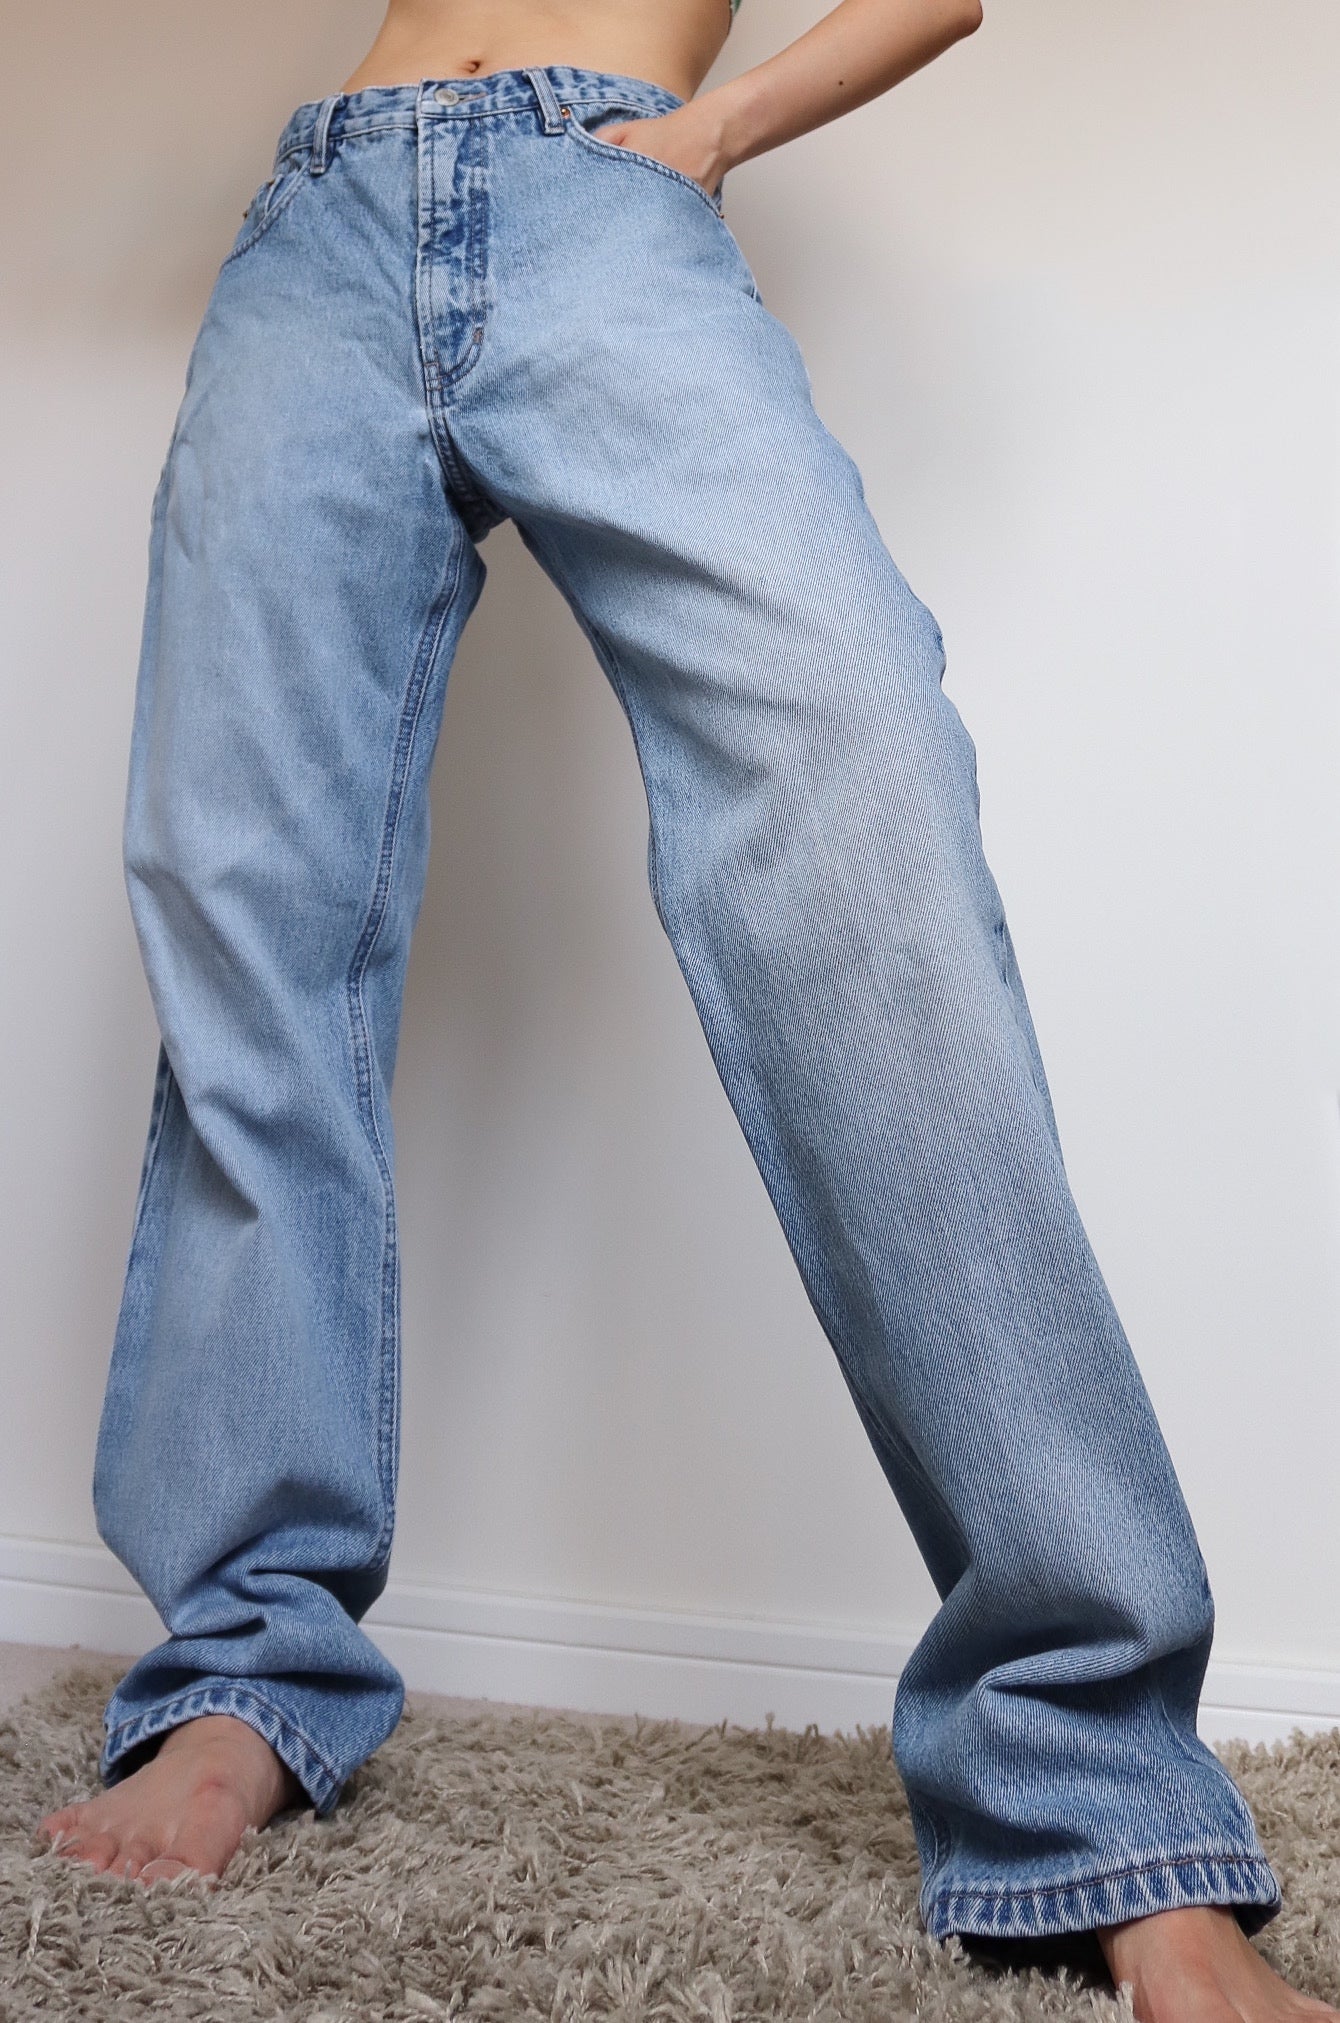 blue jeans vintage